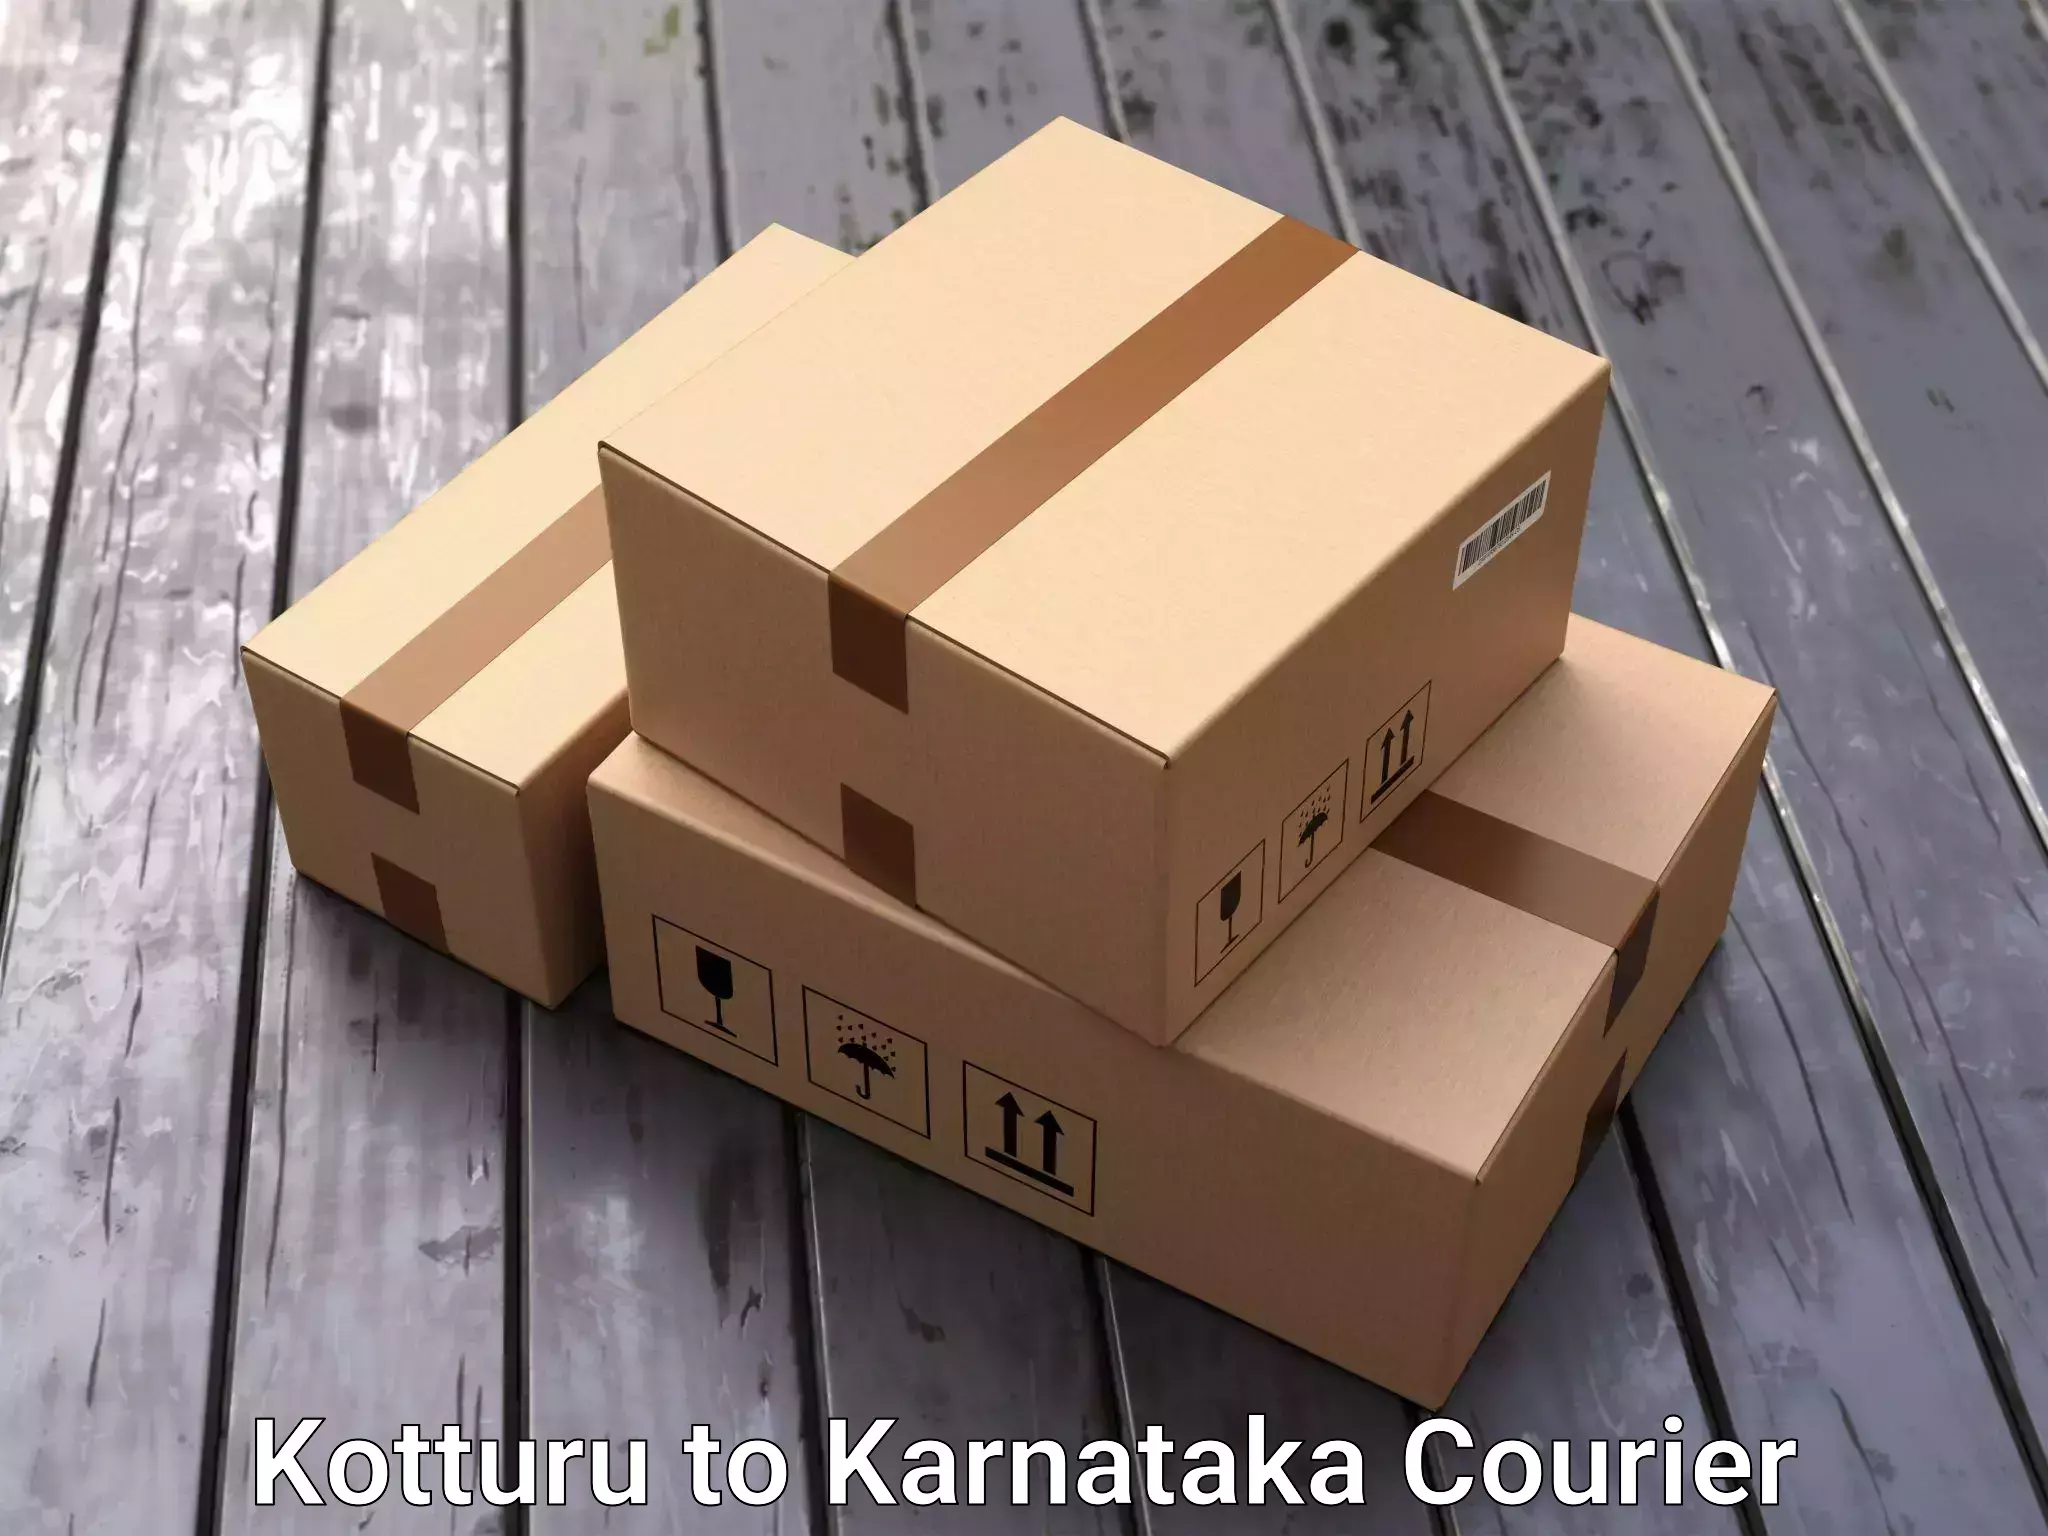 Professional movers and packers Kotturu to Karnataka